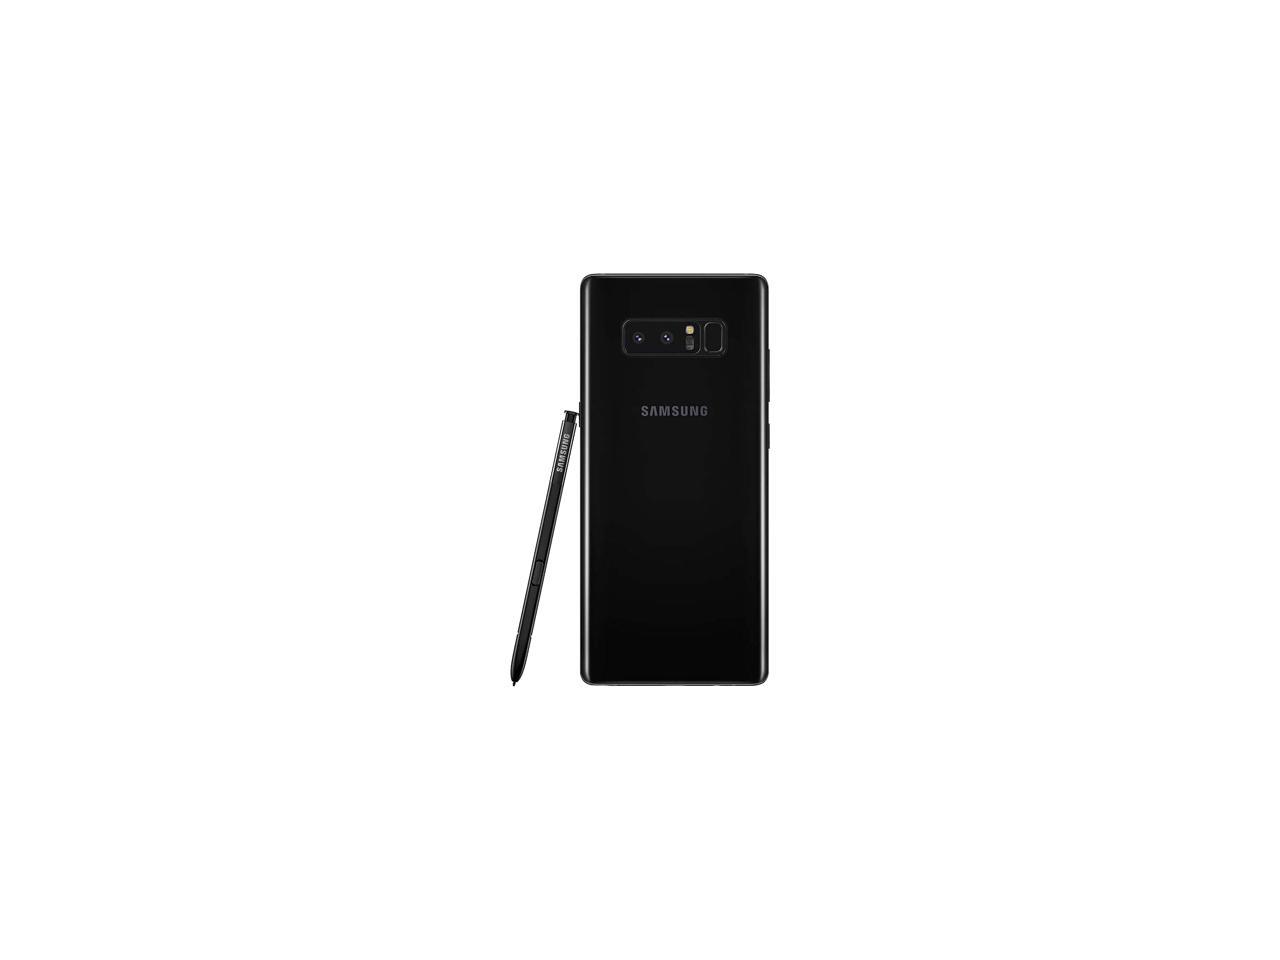 Samsung Galaxy Note 8 4G LTE Unlocked GSM Android Phone w/ Dual 12 Megapixel Camera - (Used) 6.3" Midnight Black 64GB 6GB RAM